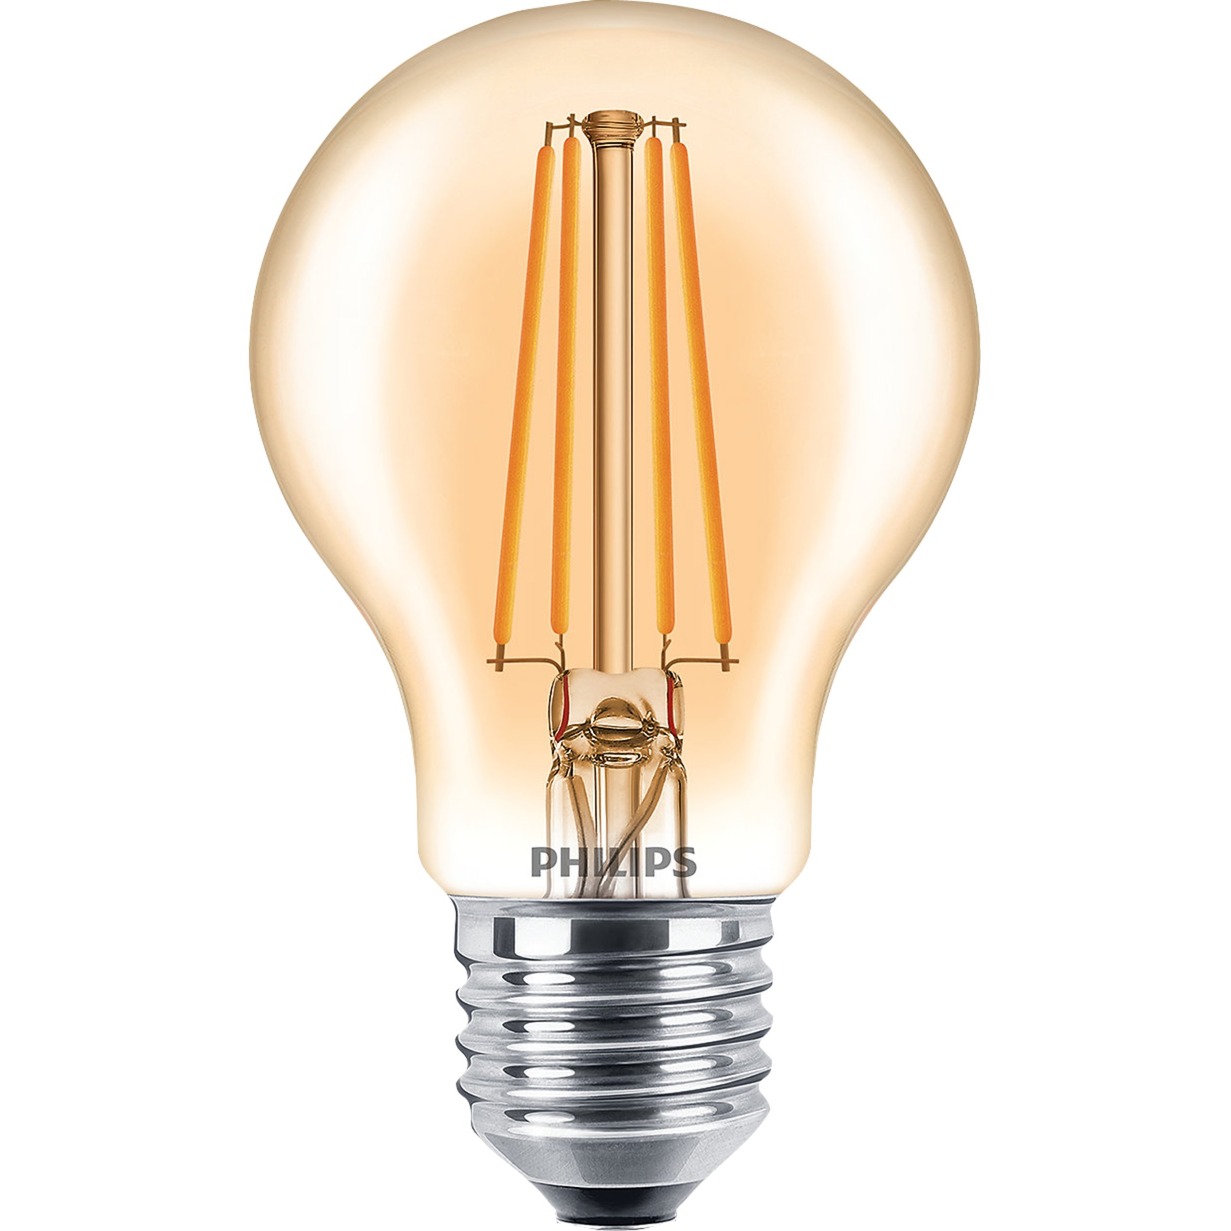 Classic 8718696709566 energy-saving lamp Z?oto 7,5 W E27 A+, Lampa LED